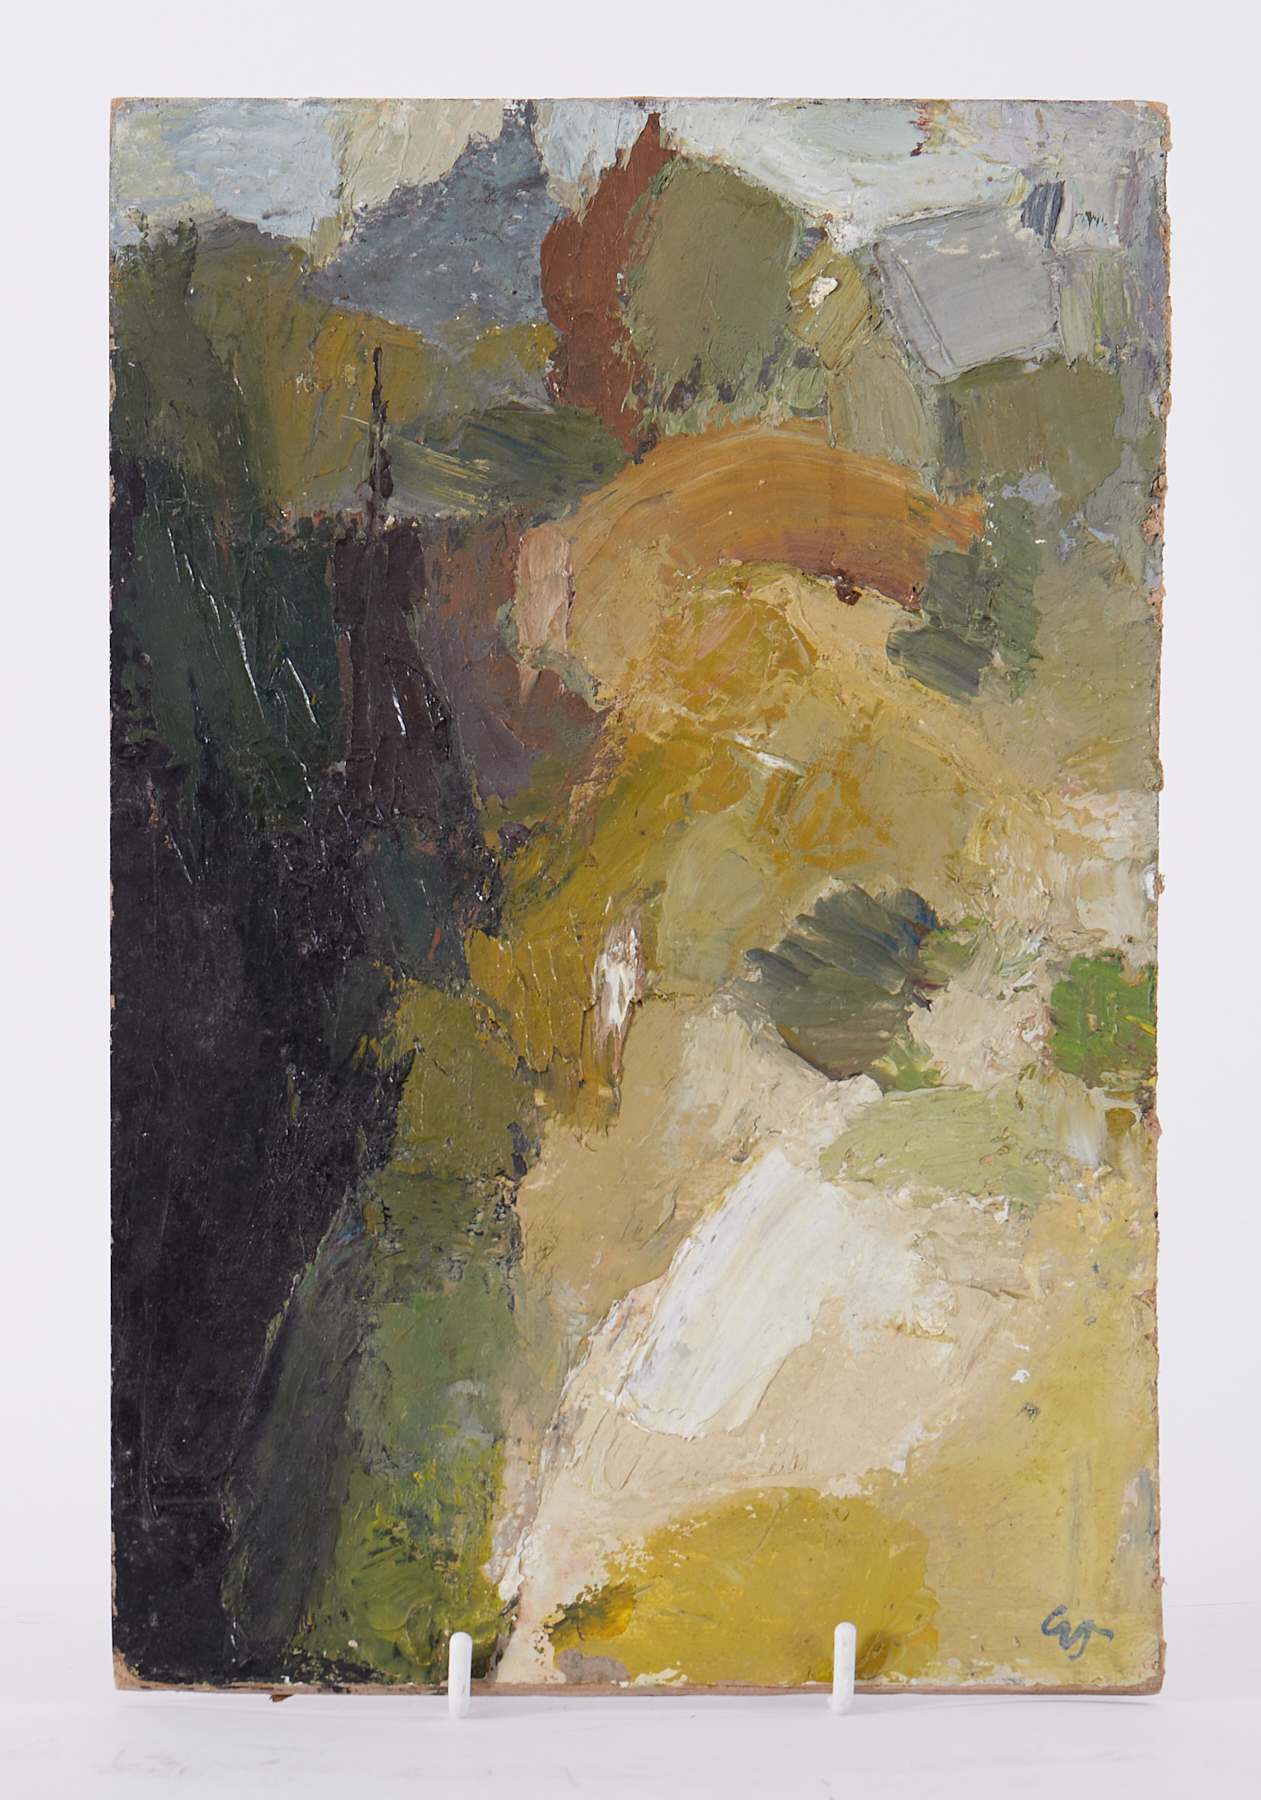 Unframed painting titled ' Landscape, Dawlish' c.1960, oil on board, 30cm x 20cm